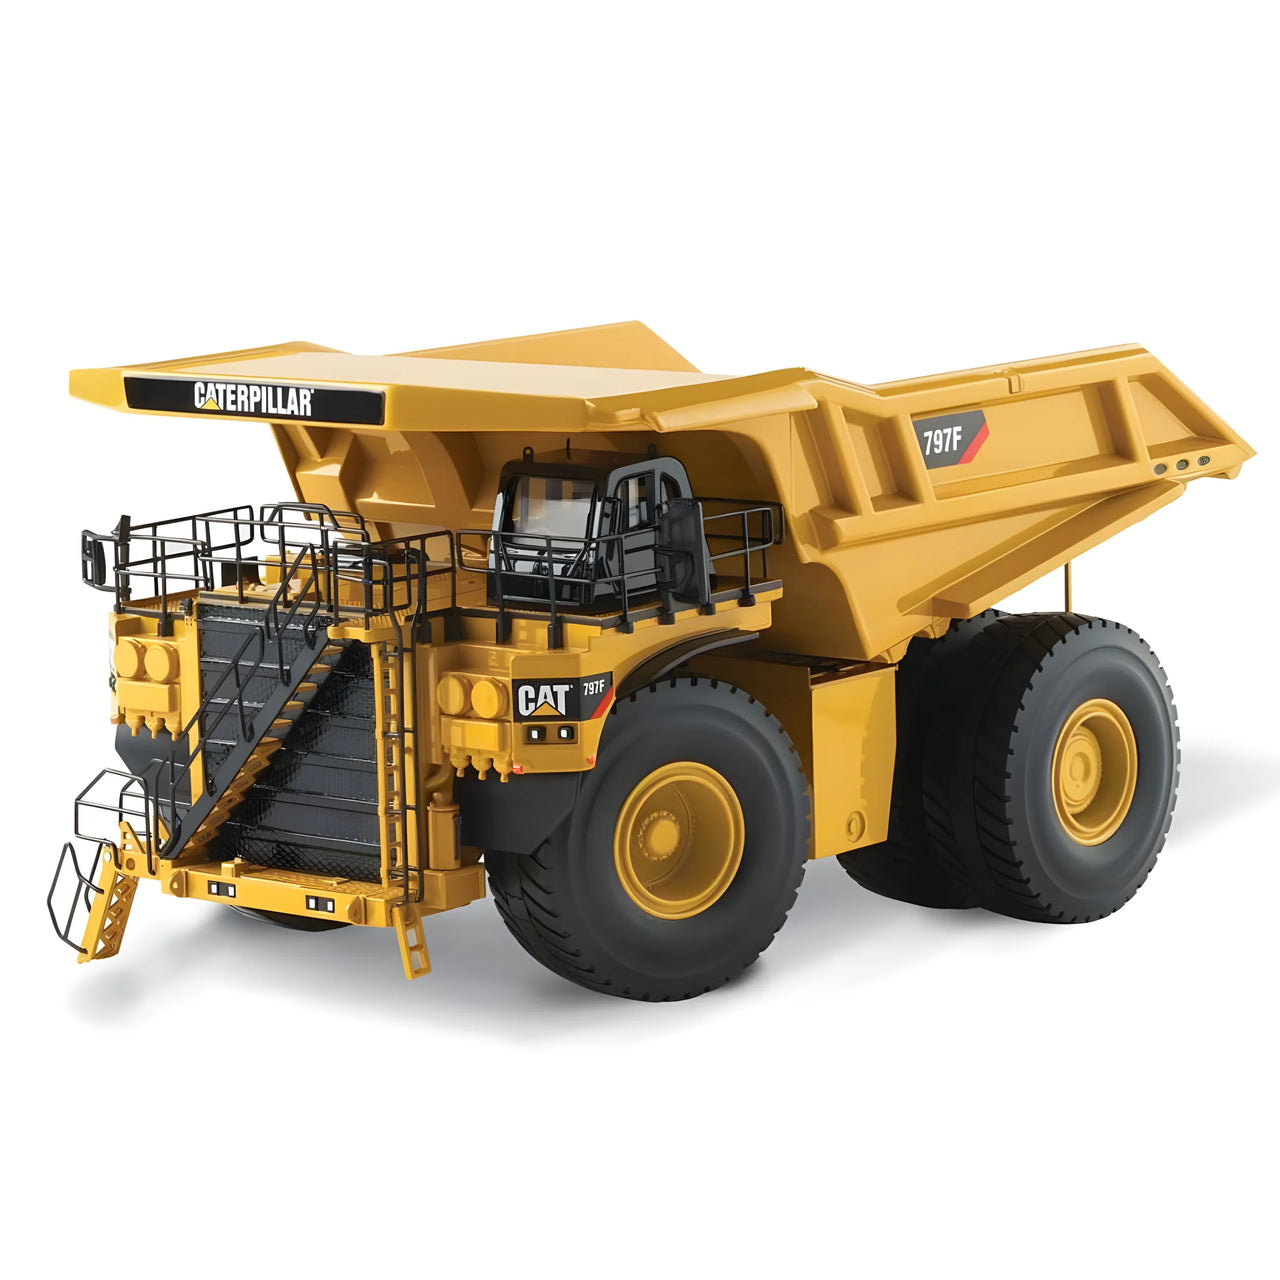 55206 Caterpillar 797F Mining Truck Scale 1:50 (Discontinued Model)